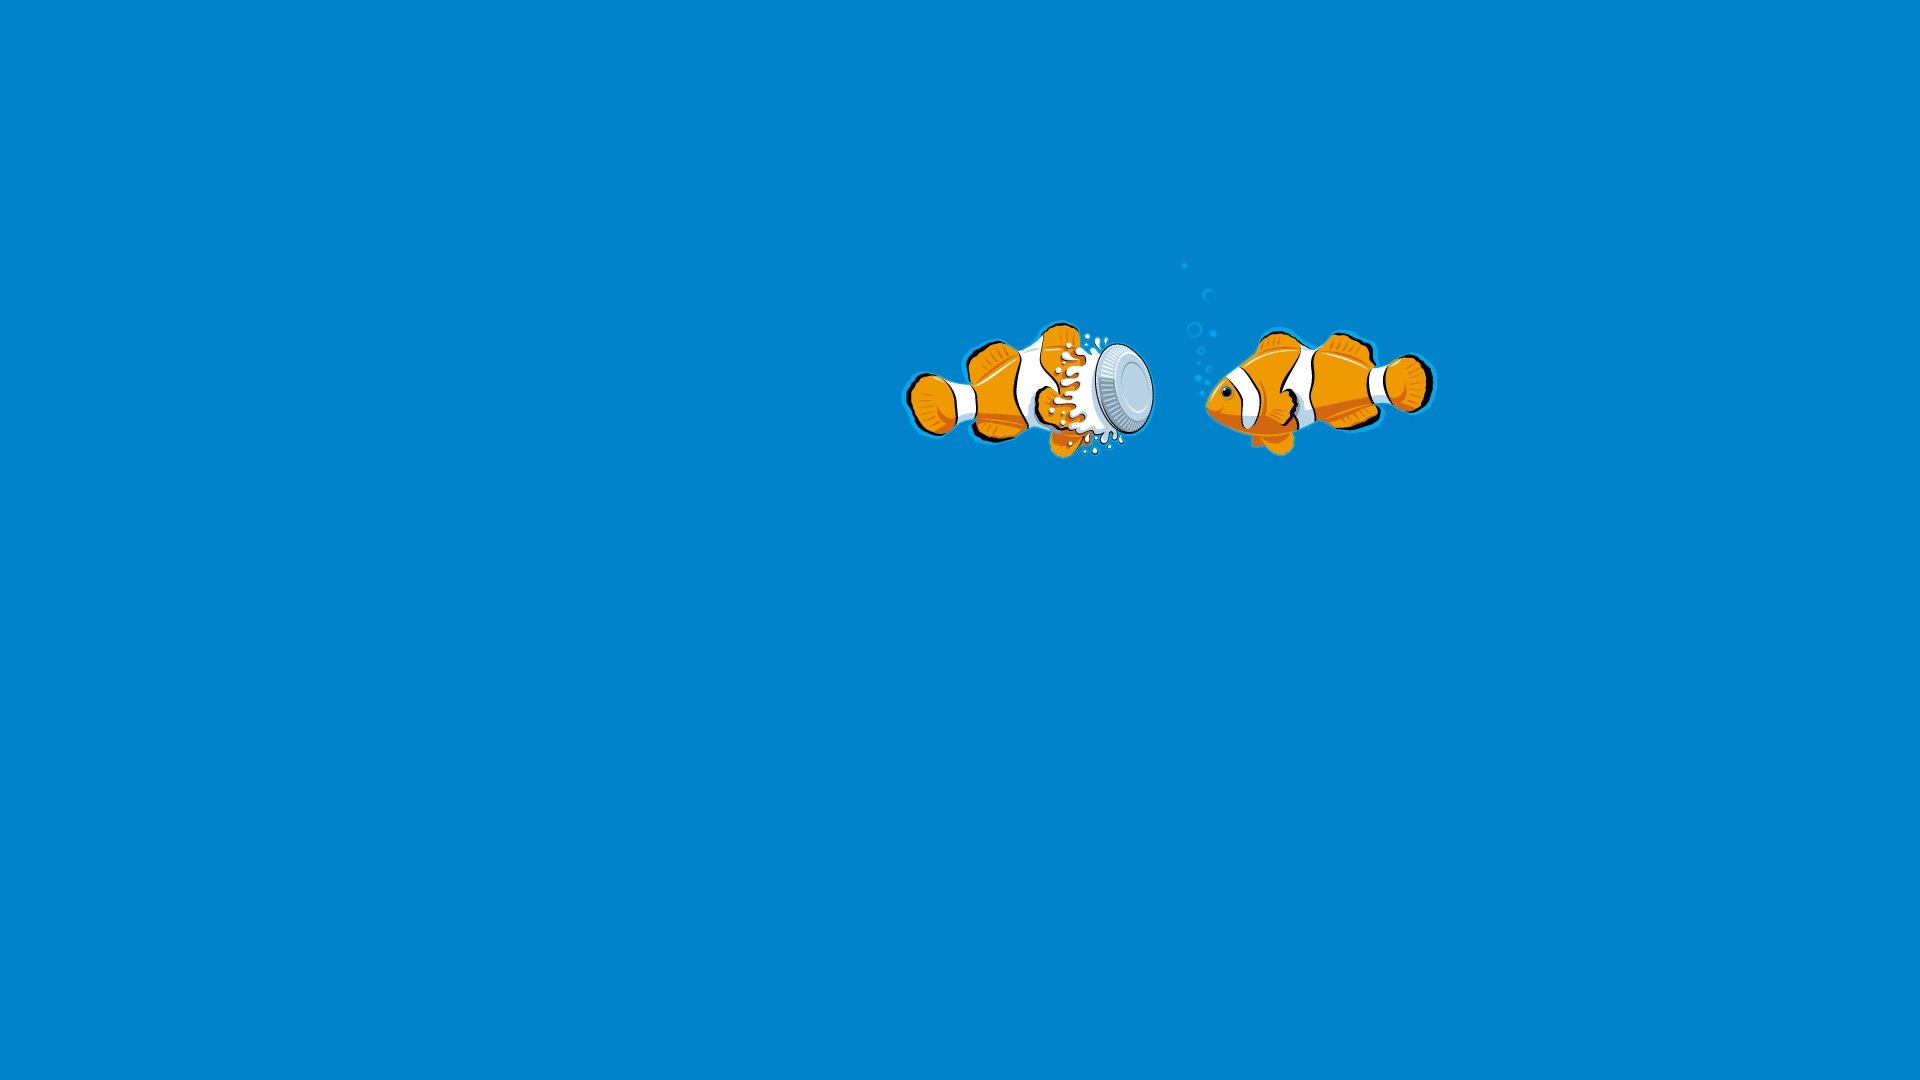 Blue Fish Underwater Clown Pie Humor Funny Ocean Sea Wallpaper